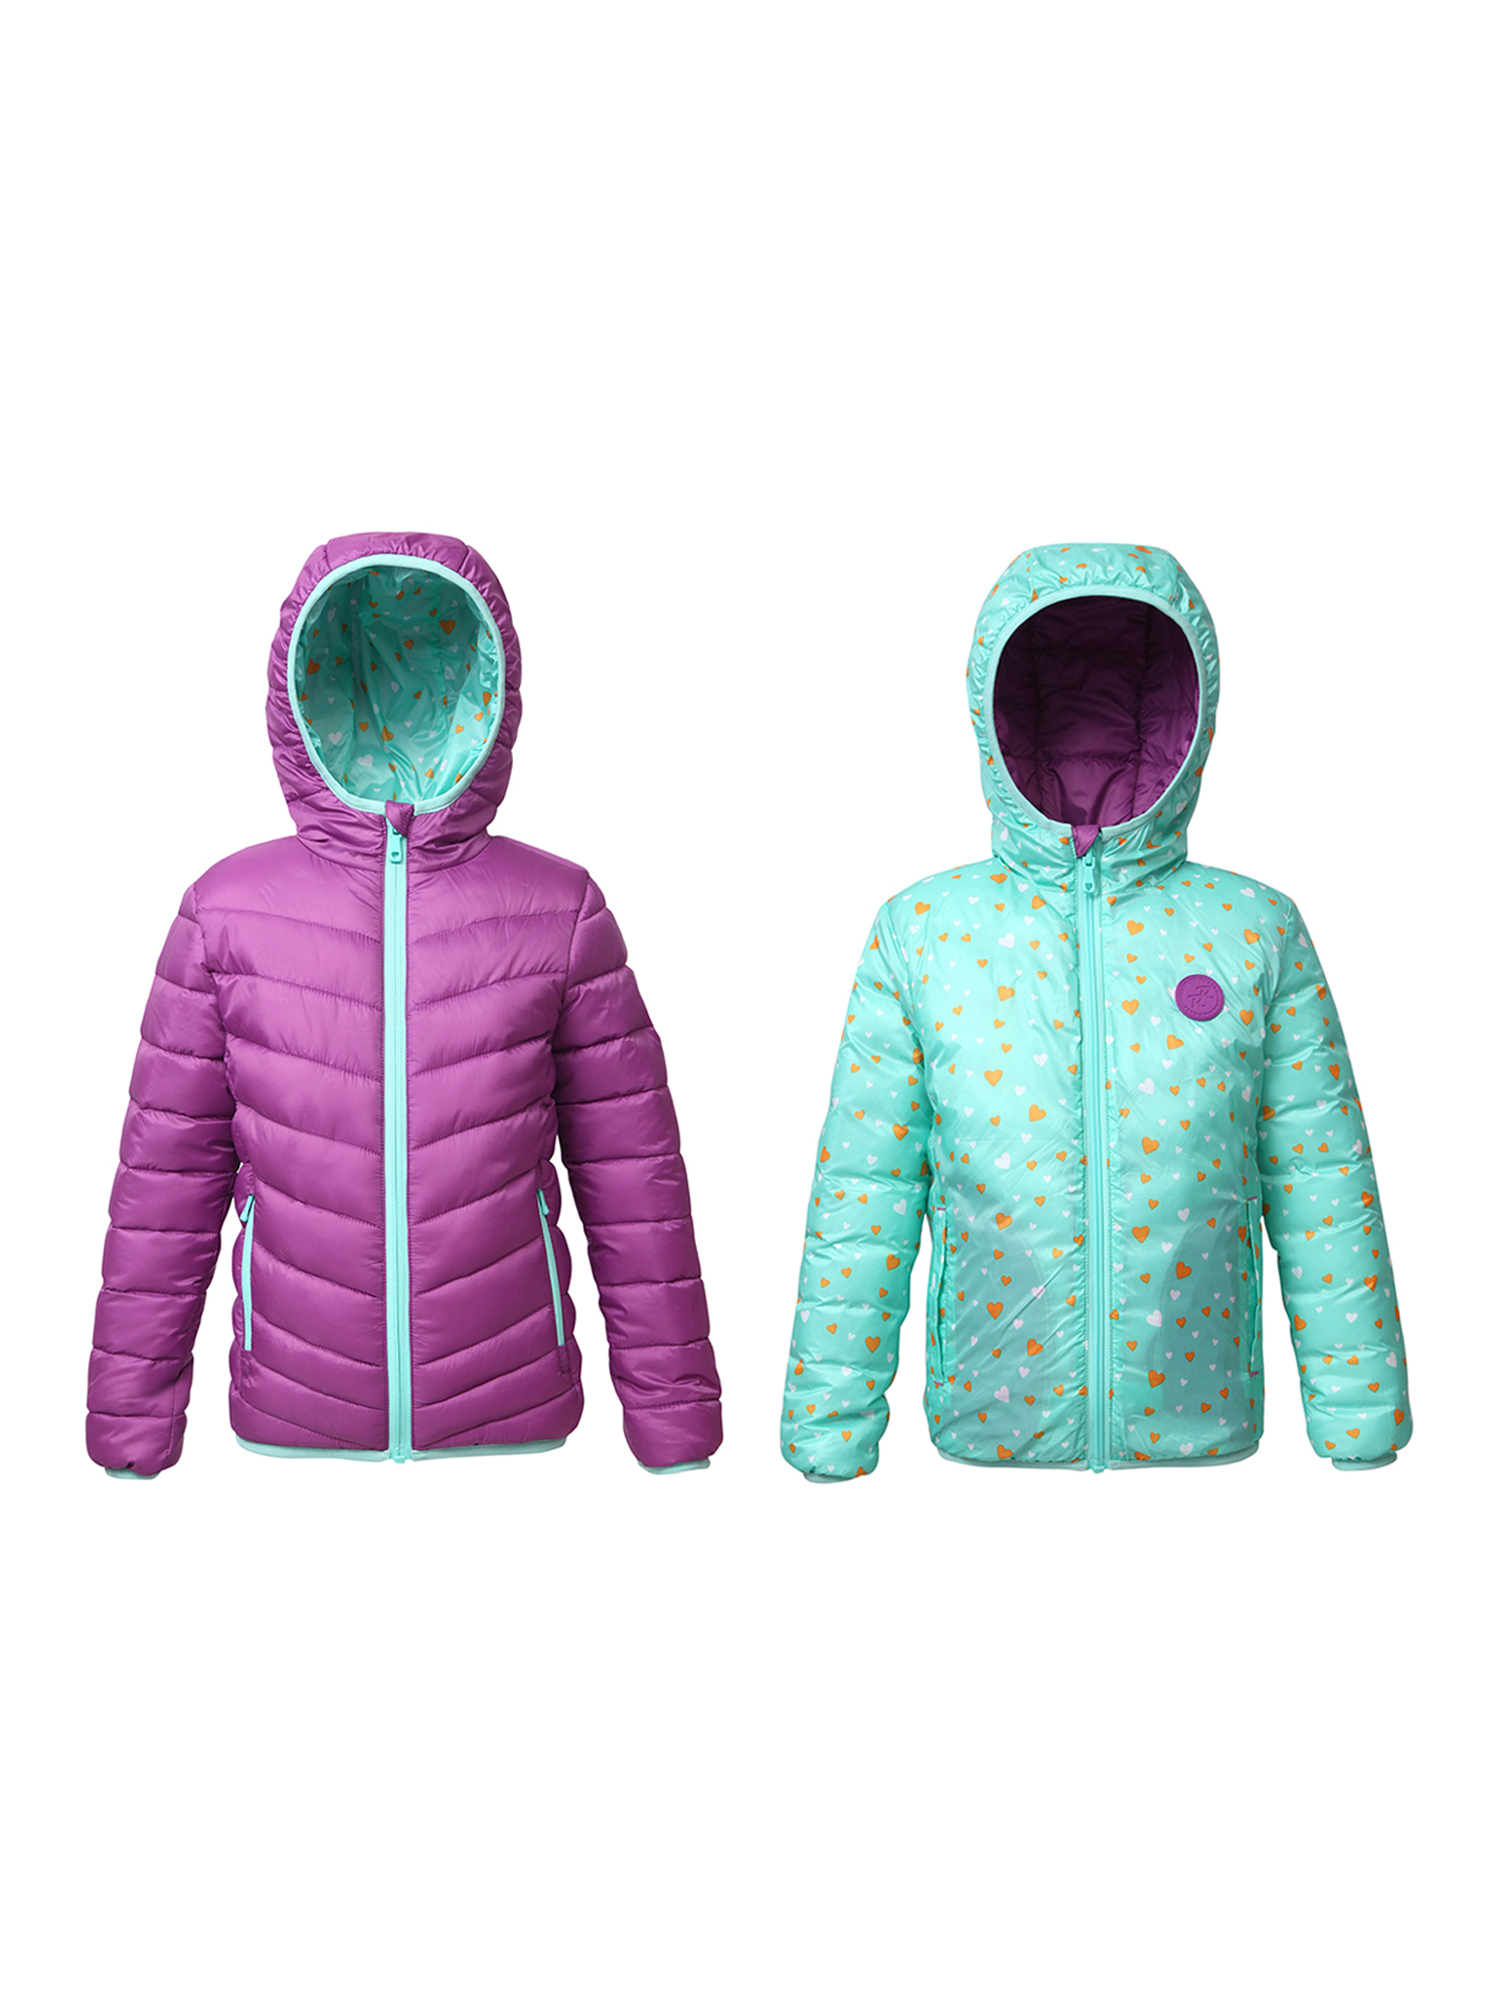 Rokka&Rolla Girls' Reversible Light Puffer Jacket Coat, Sizes 4-18 - image 3 of 9